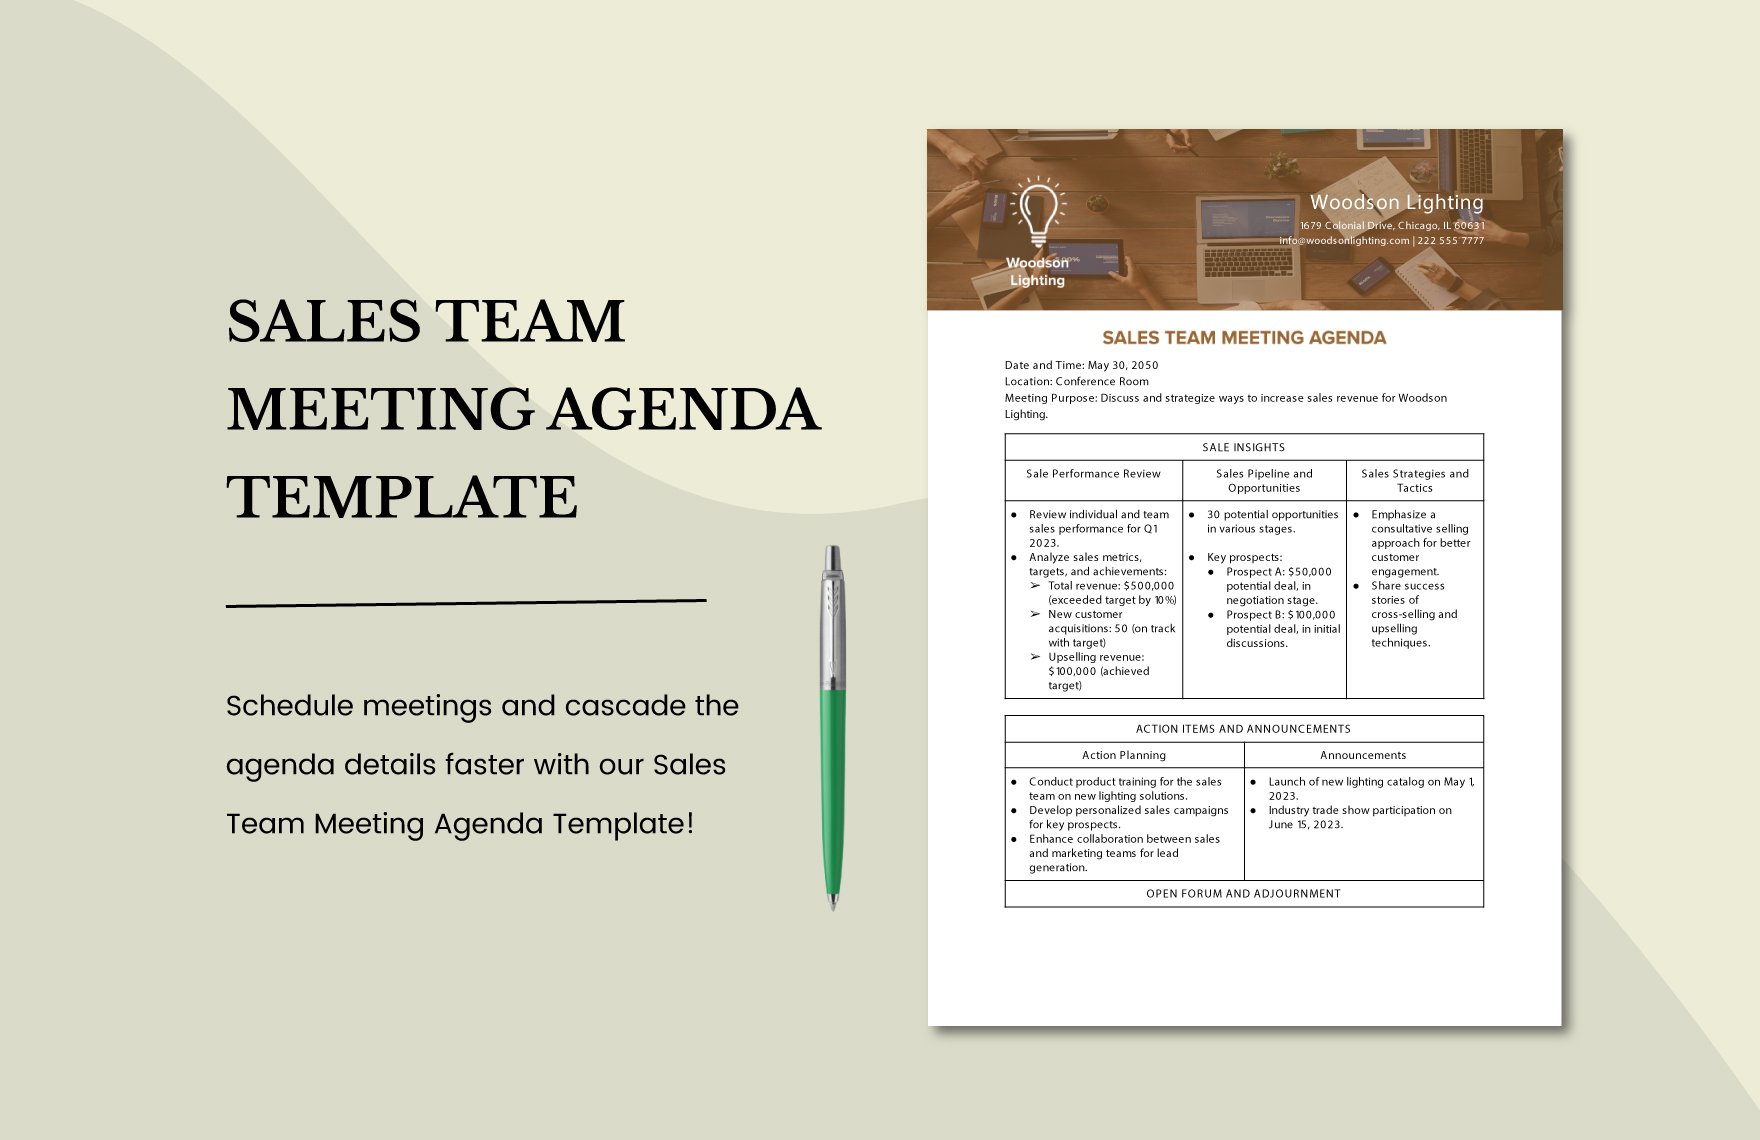 Sales Team Meeting Agenda Template in Word, Google Docs, PDF